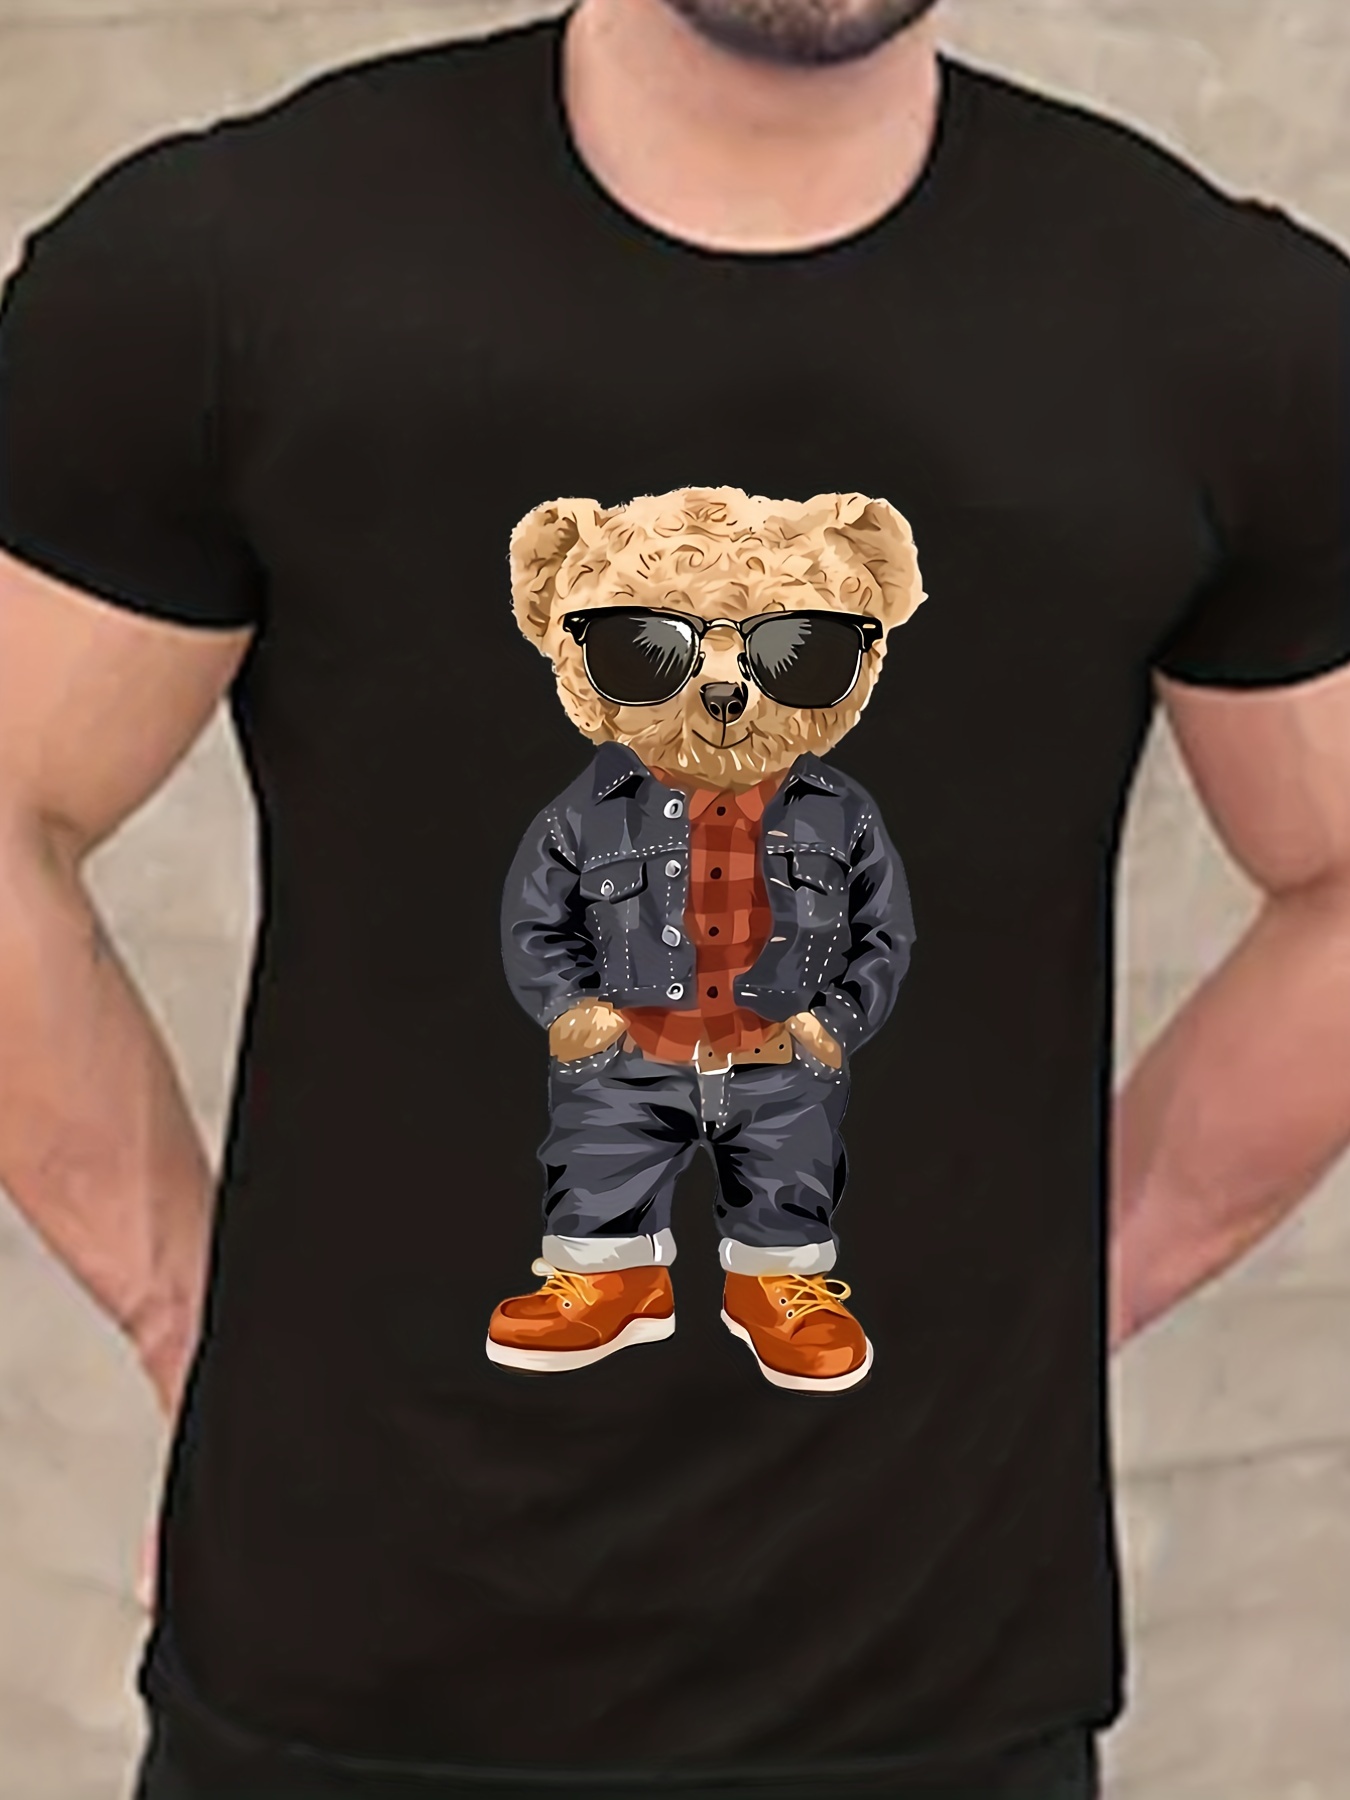 Tees For Men, Denim Teddy Bear Print T Shirt, Casual Short Sleeve